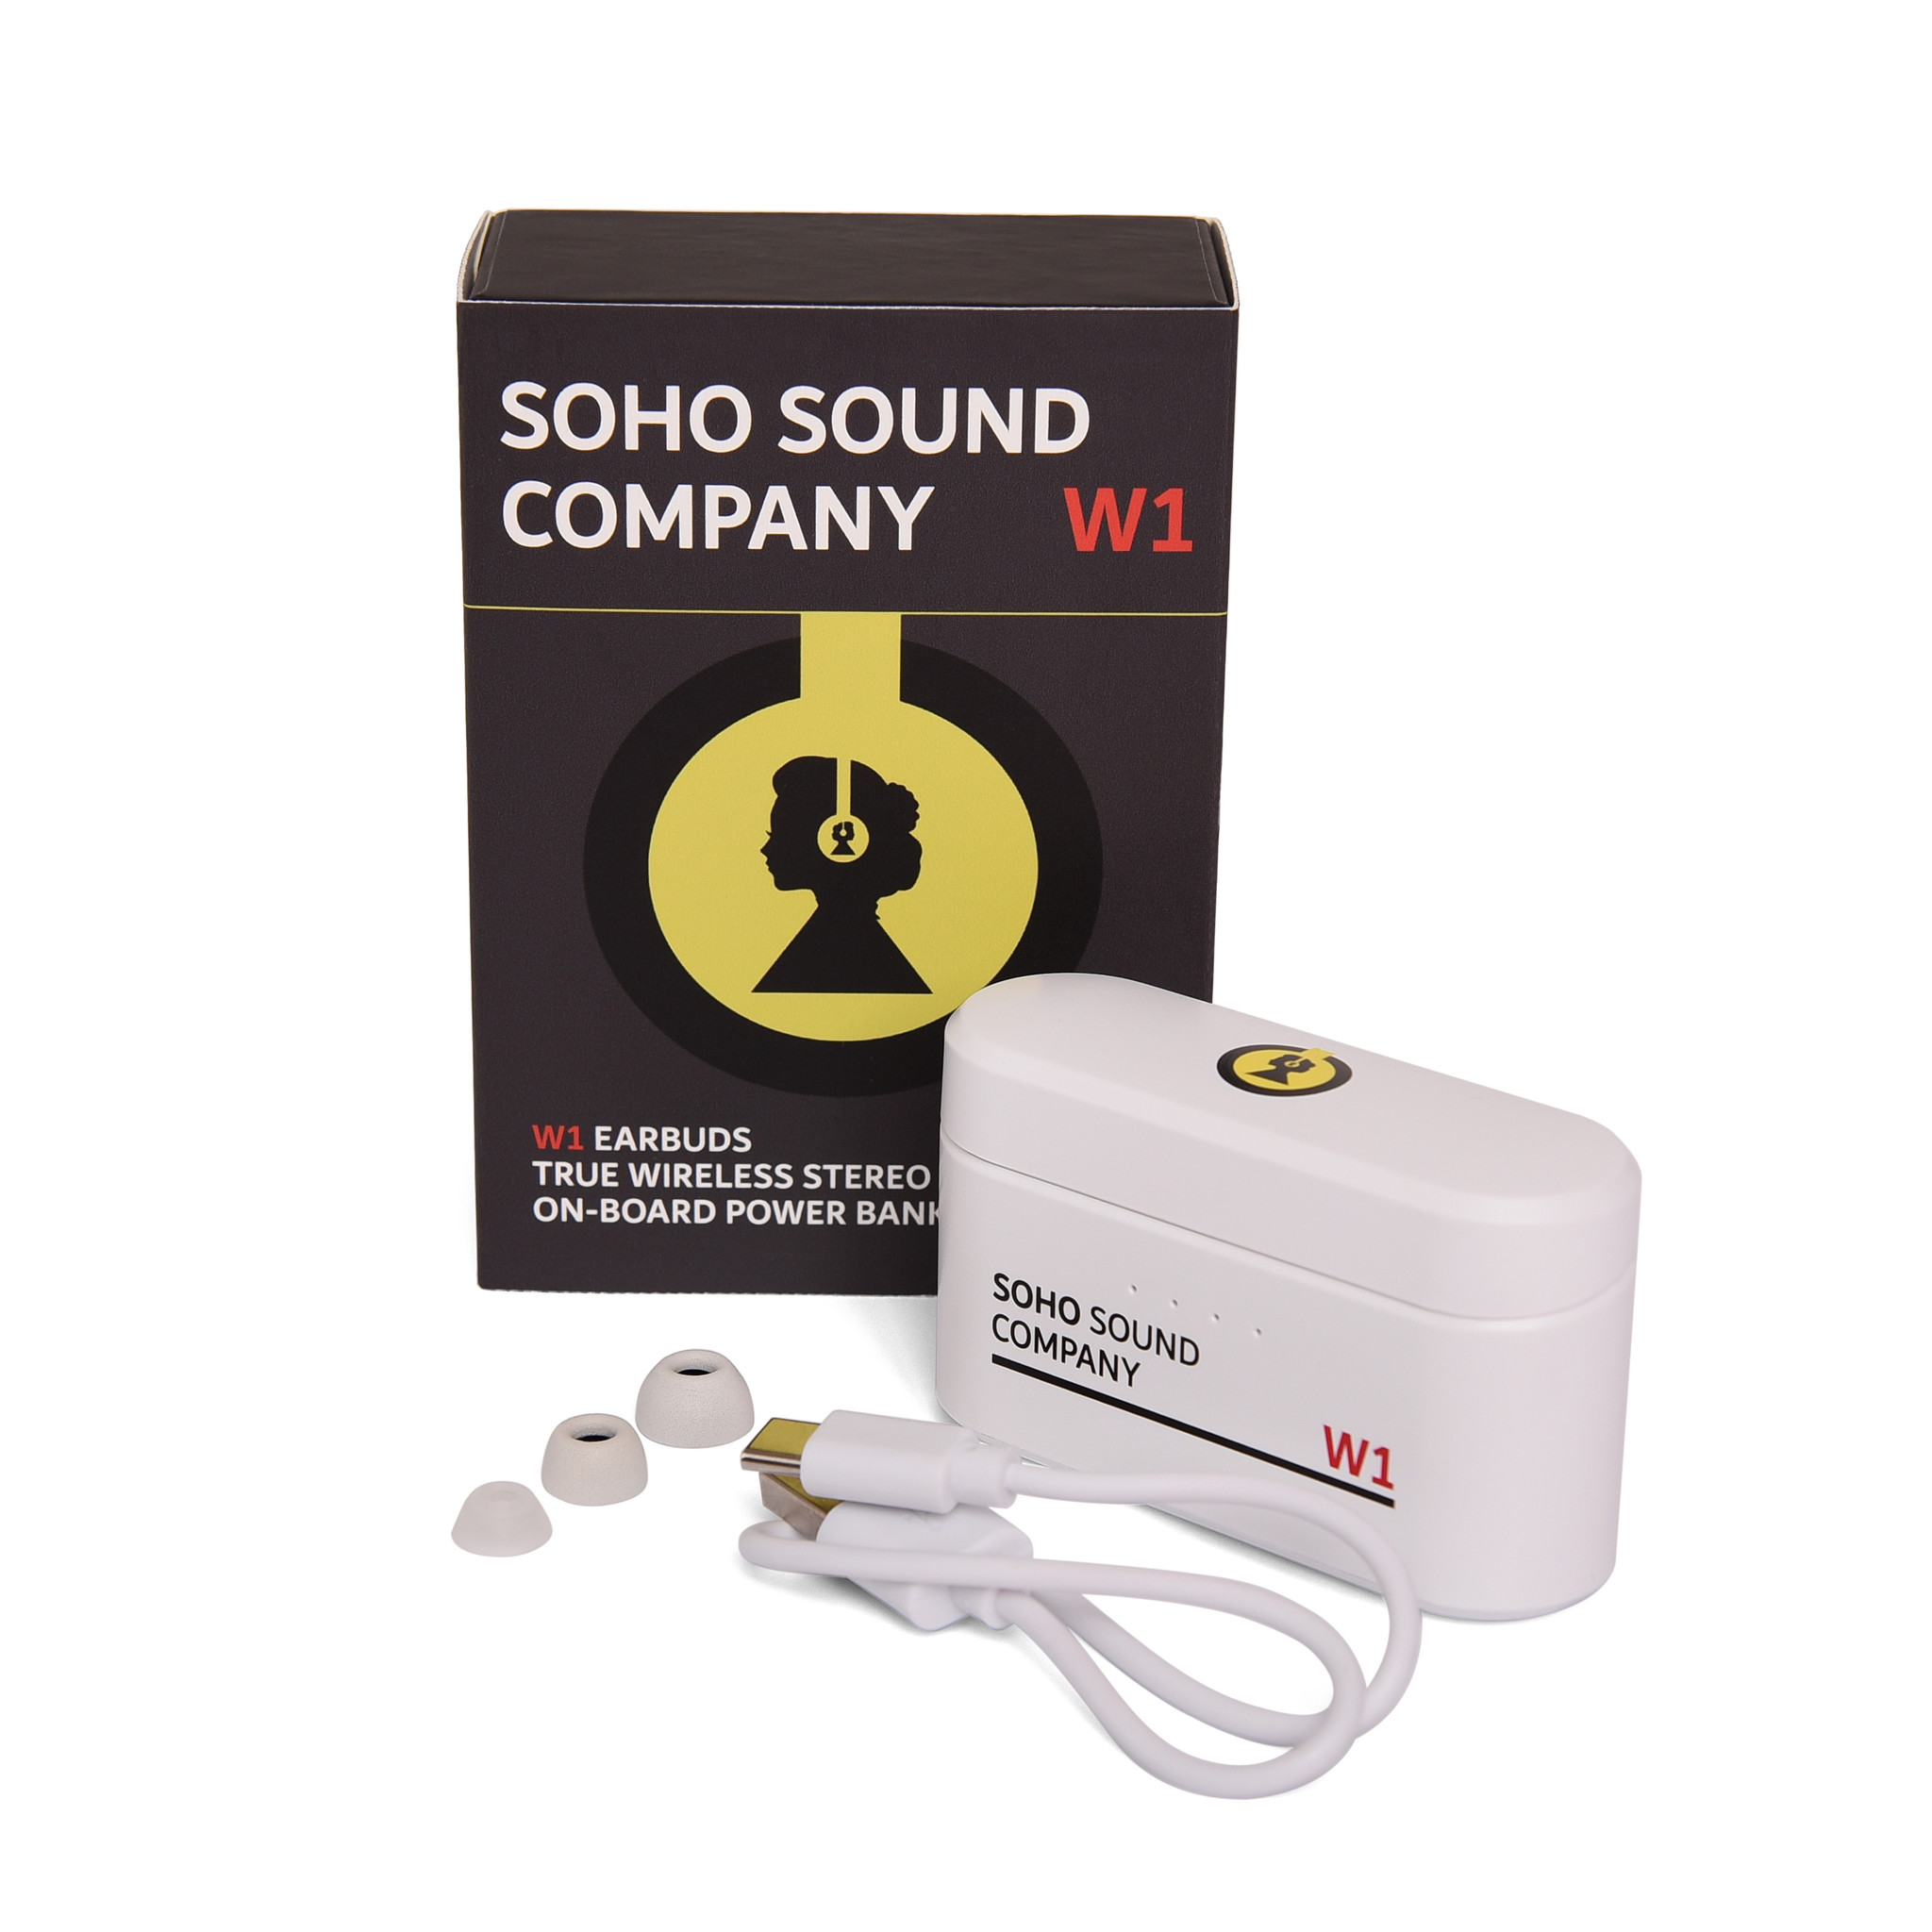 SoHo Sound Company W1 Earbuds, True Wireless Stereo Bluetooth, On-Board Power Bank 3000 mAh (White City House)